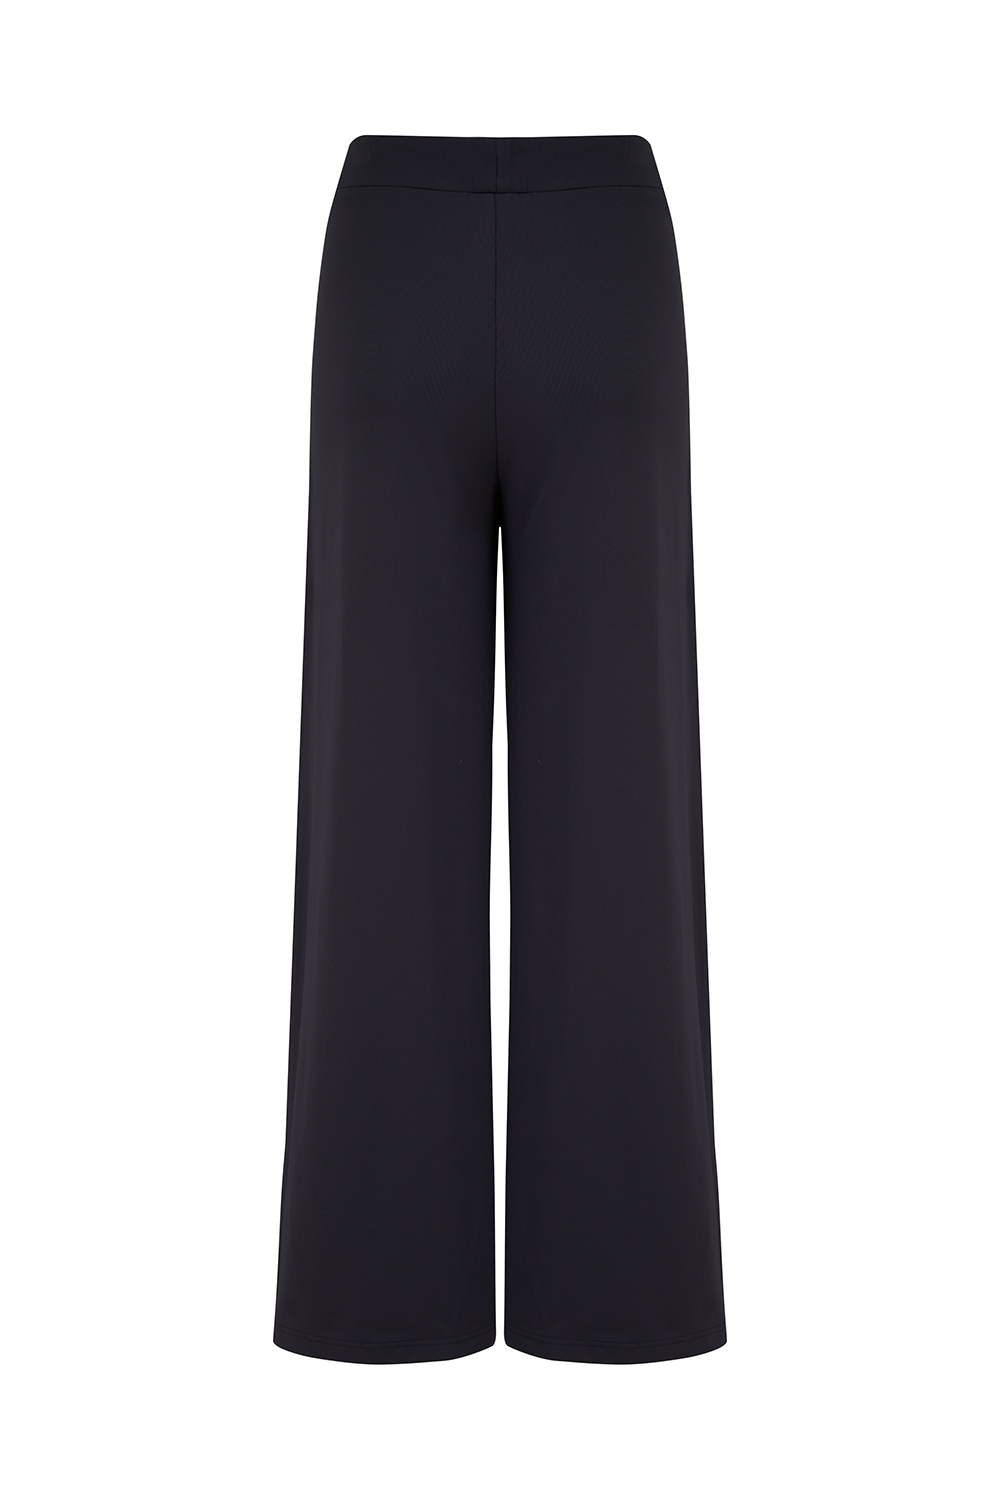 Saint James Tignes Women’s High-rise Wide Pants Navy - New SS21 Collection